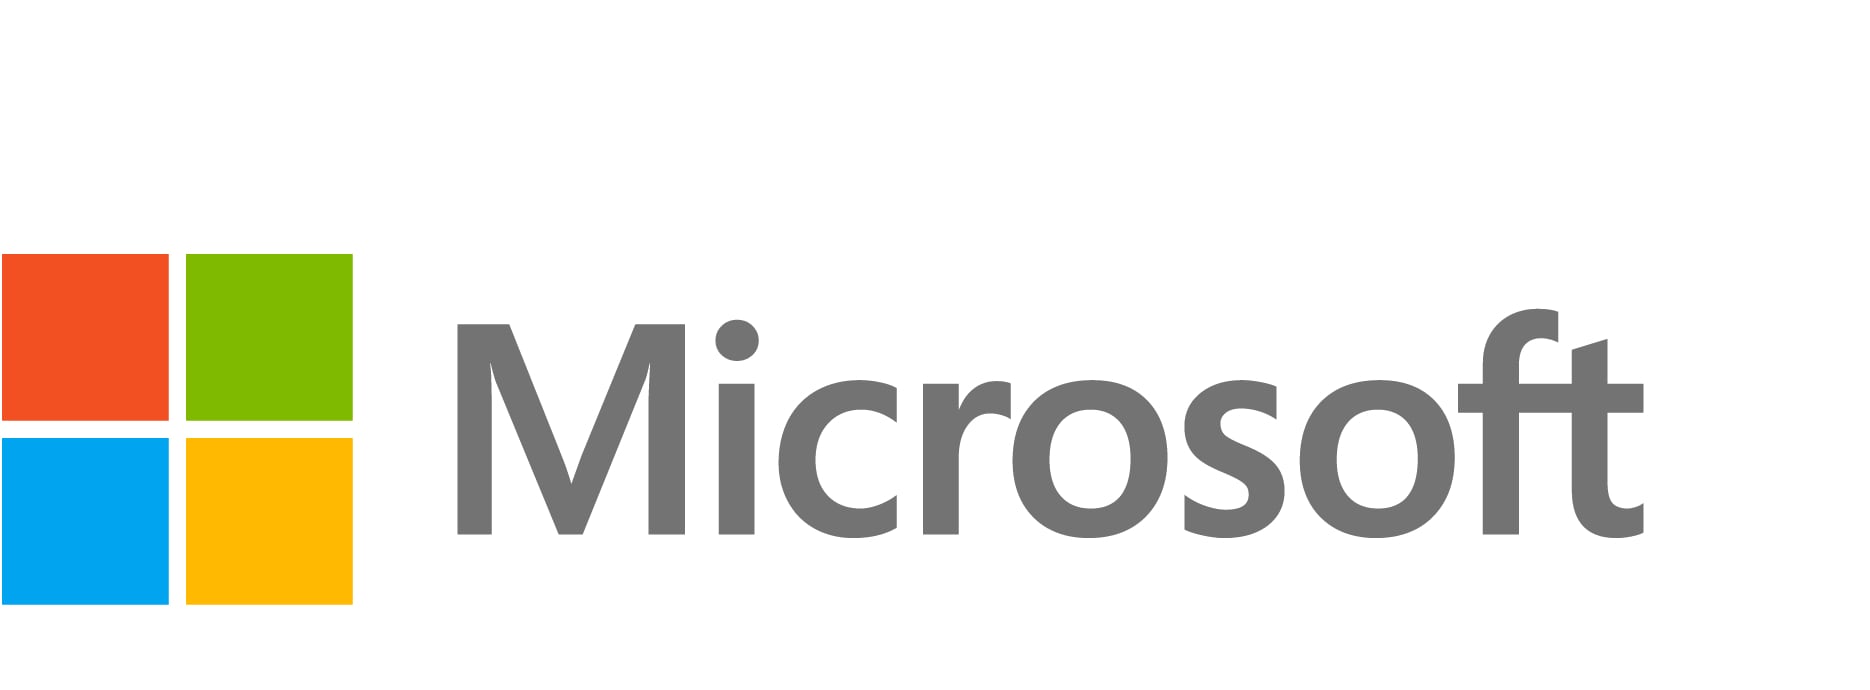 Microsoft Virtual Desktop Access - subscription license (1 month) - 1 device